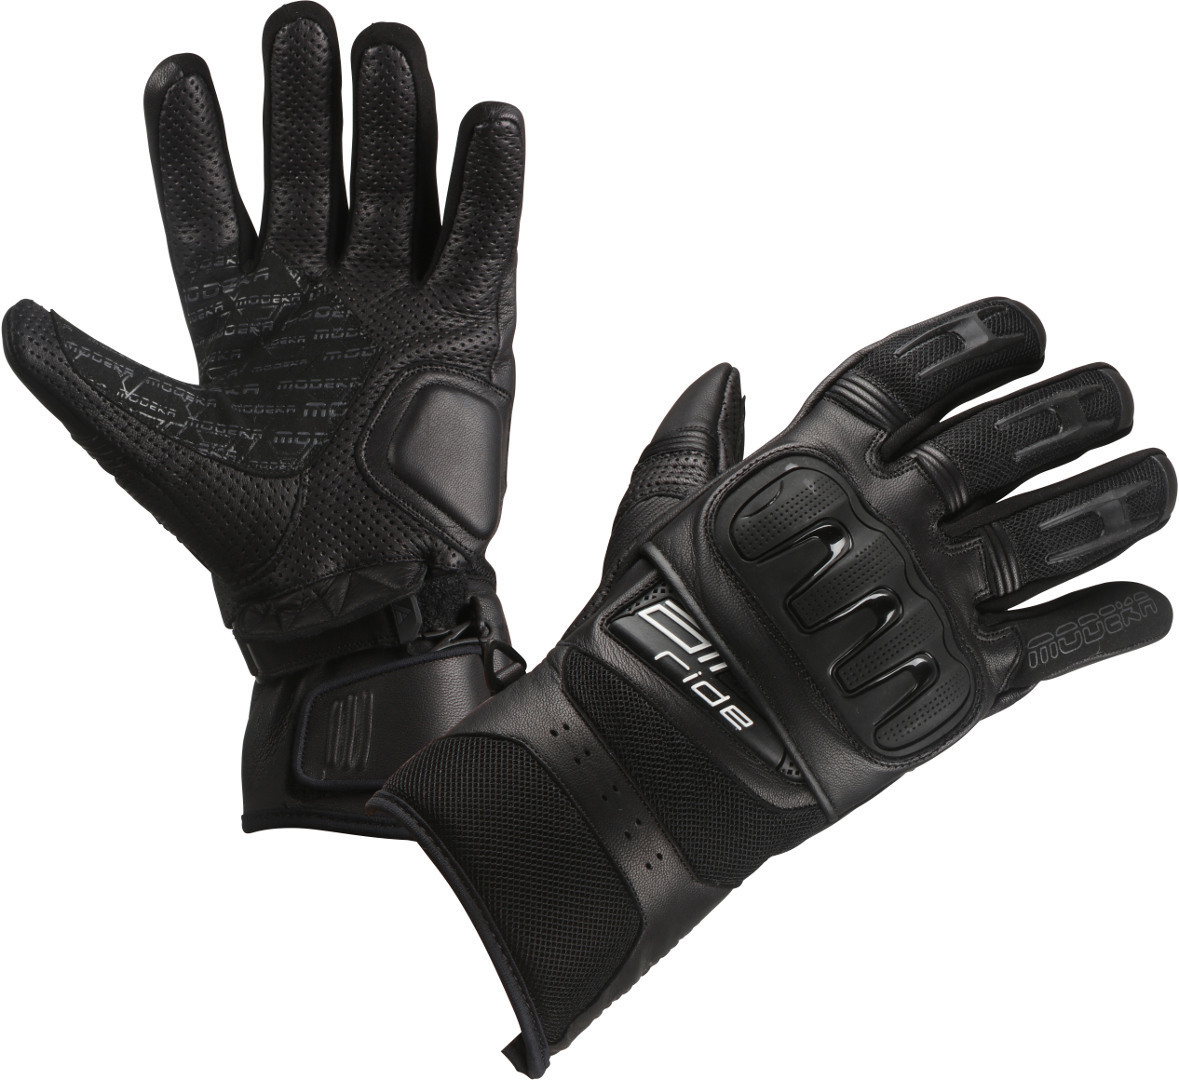 Modeka Air Ride Handschuhe, schwarz, Gre M L, schwarz, Gre M L